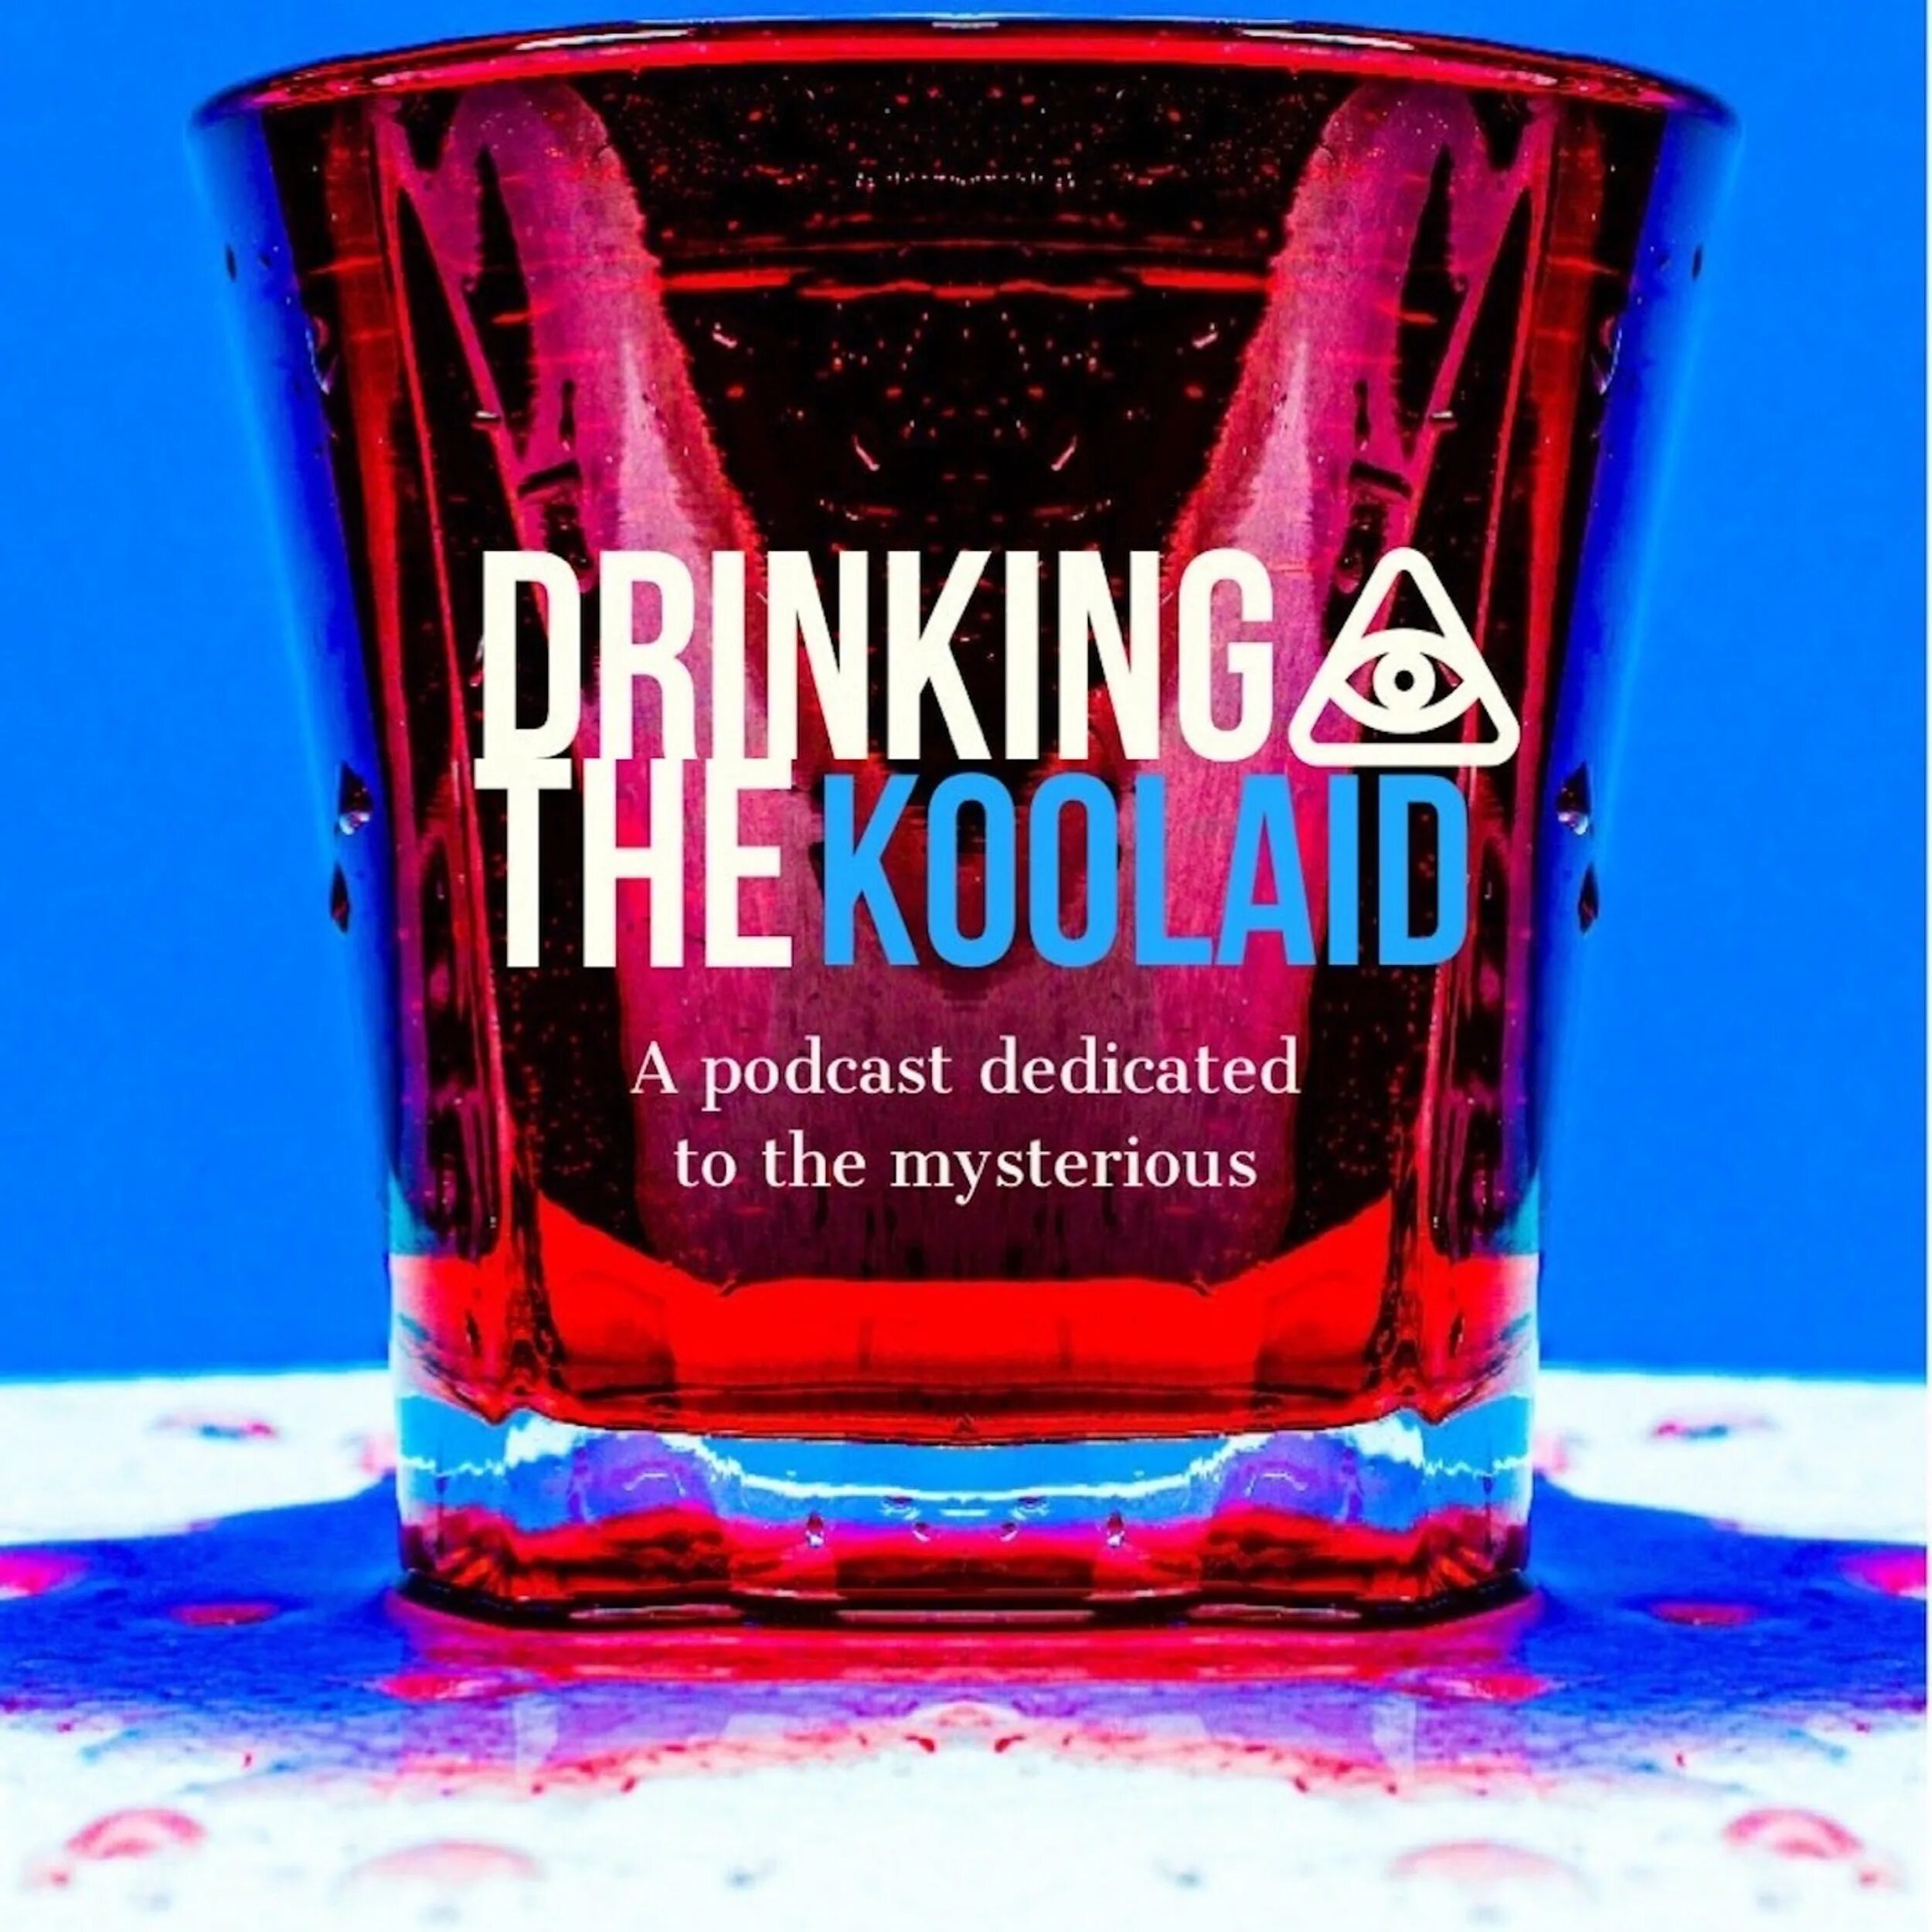 Kool aid bring me the. Кулэйд что это напиток. Drink the Kool Aid. Queen-thank напиток. A mysterious Drink.